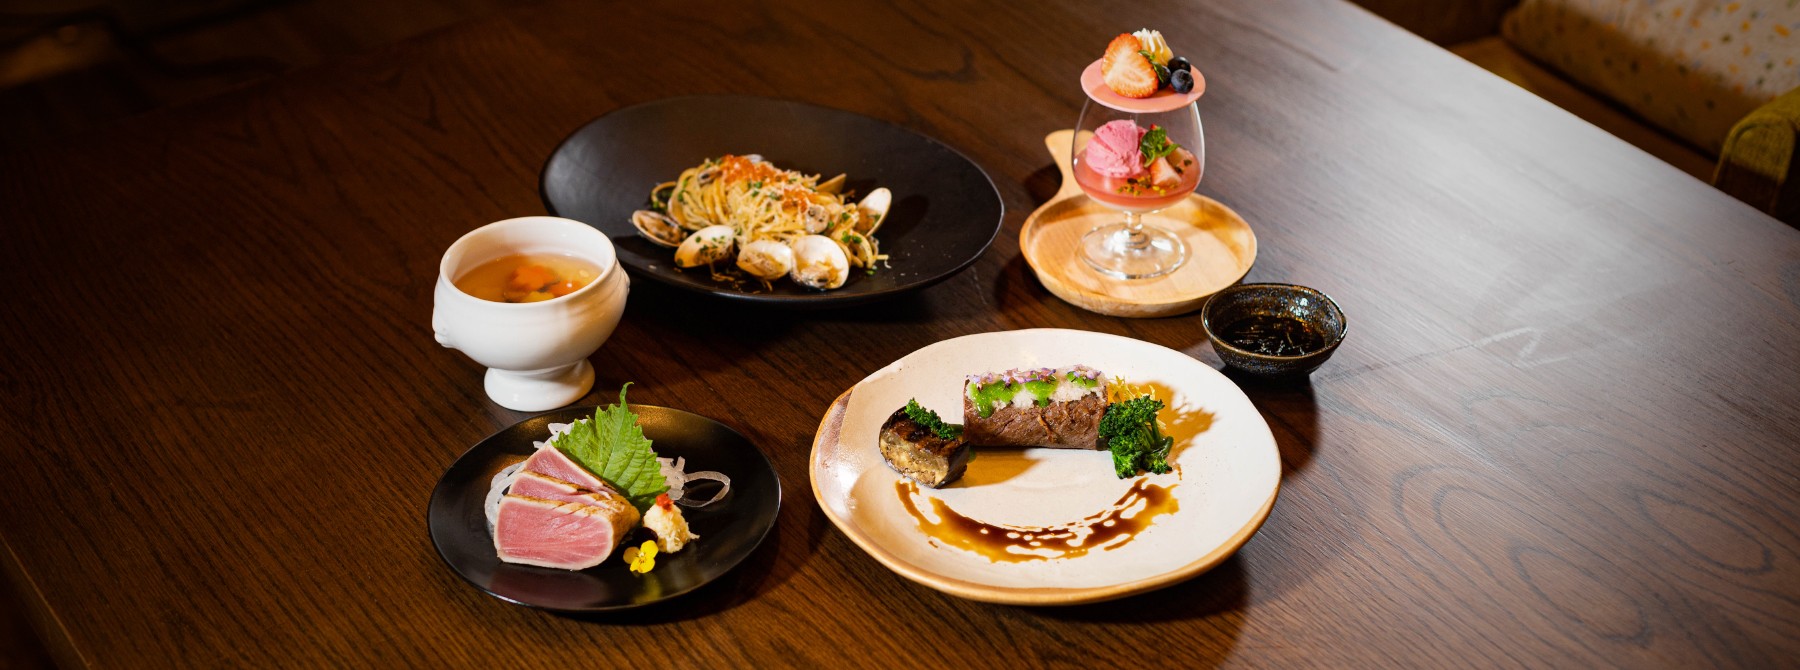 JAPANESE SET DINNER MENU